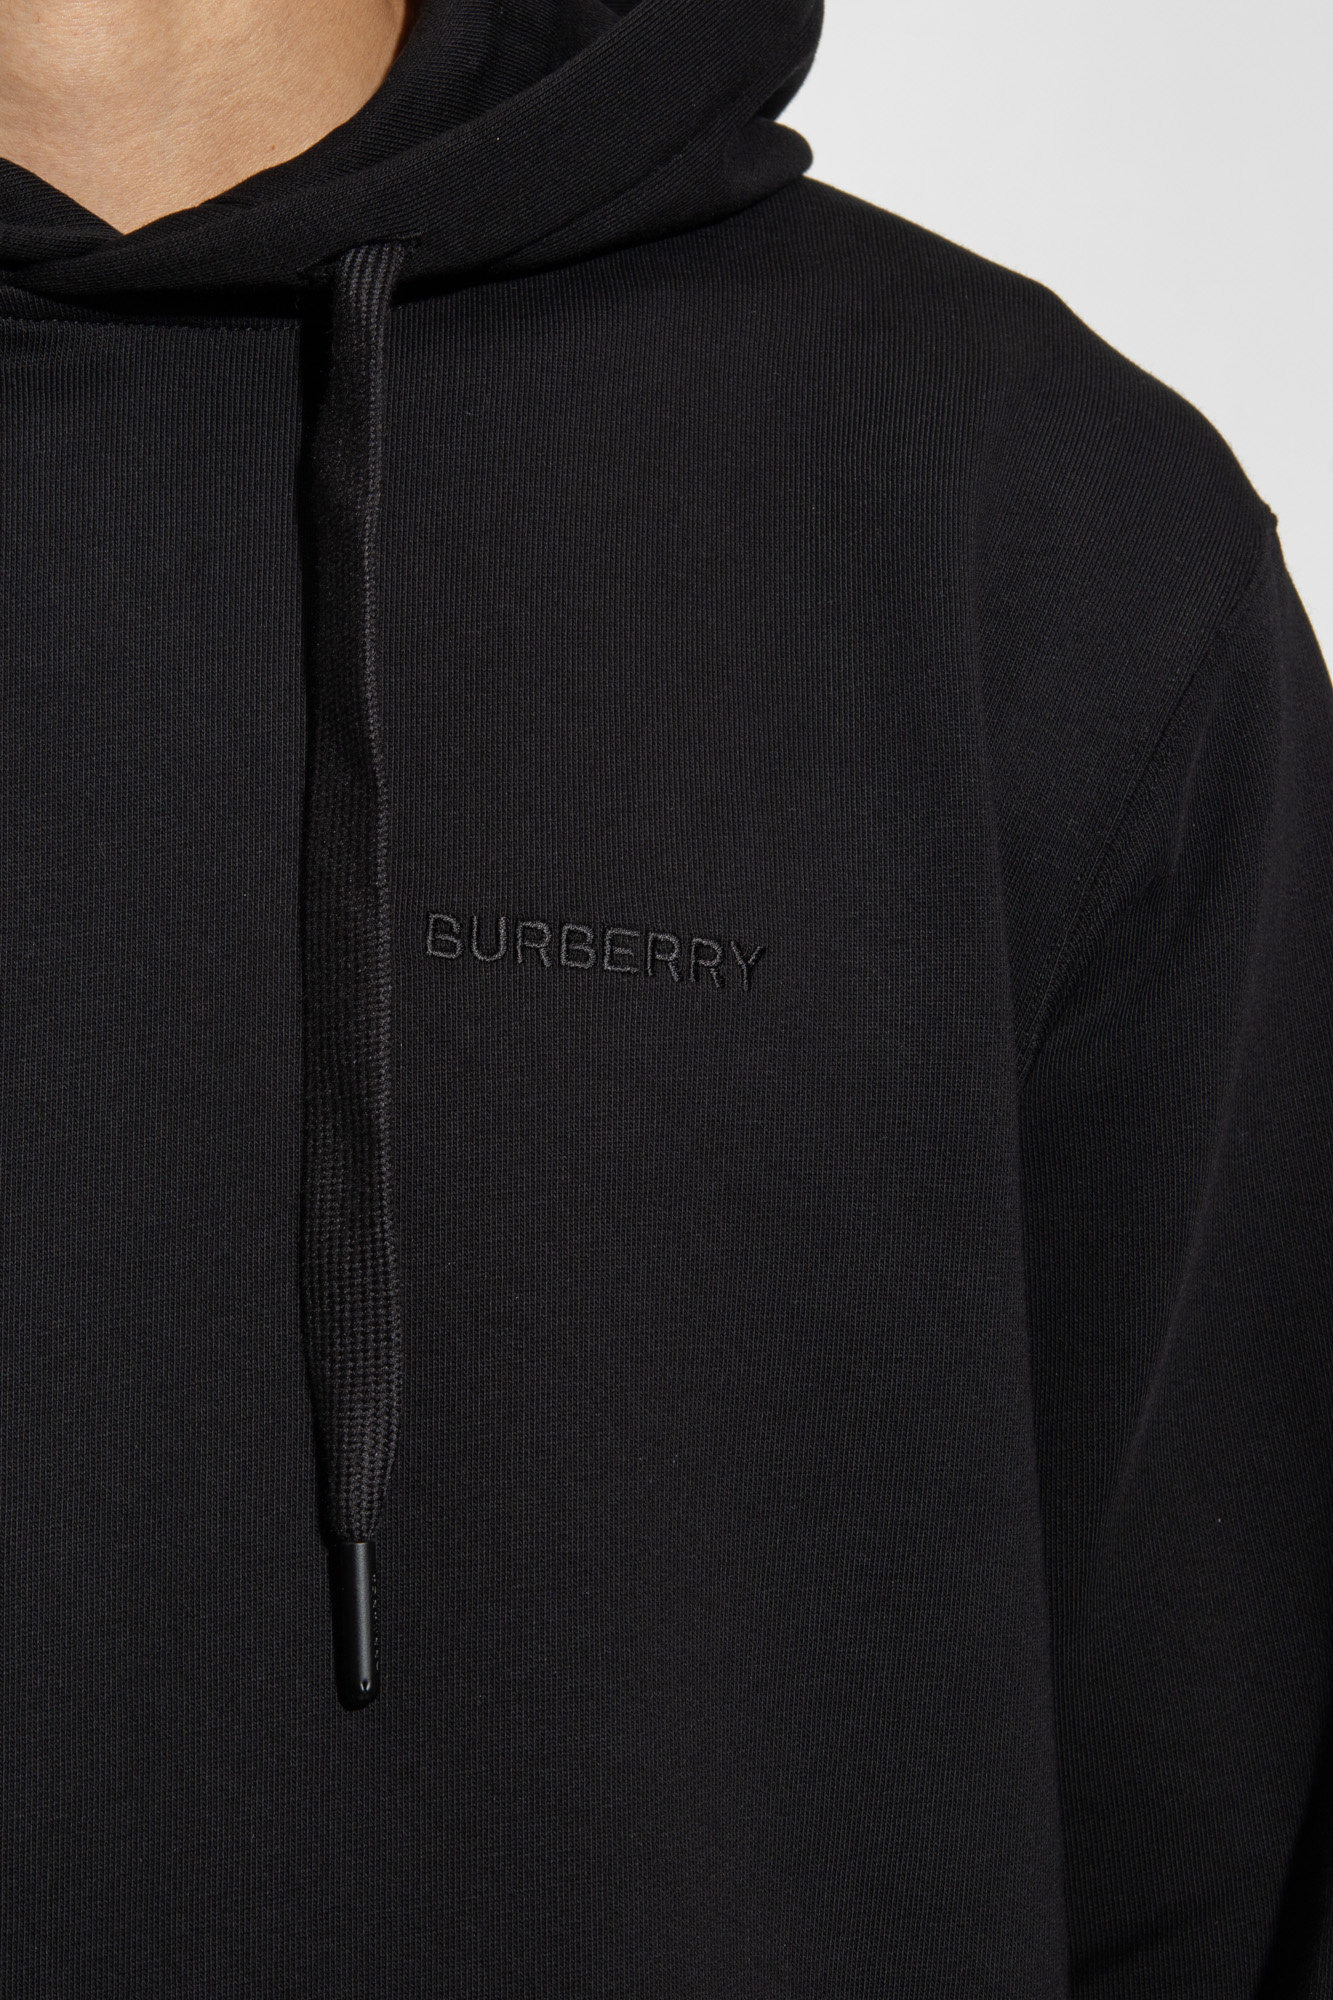 burberry BOMBER ‘Marks’ sweatshirt